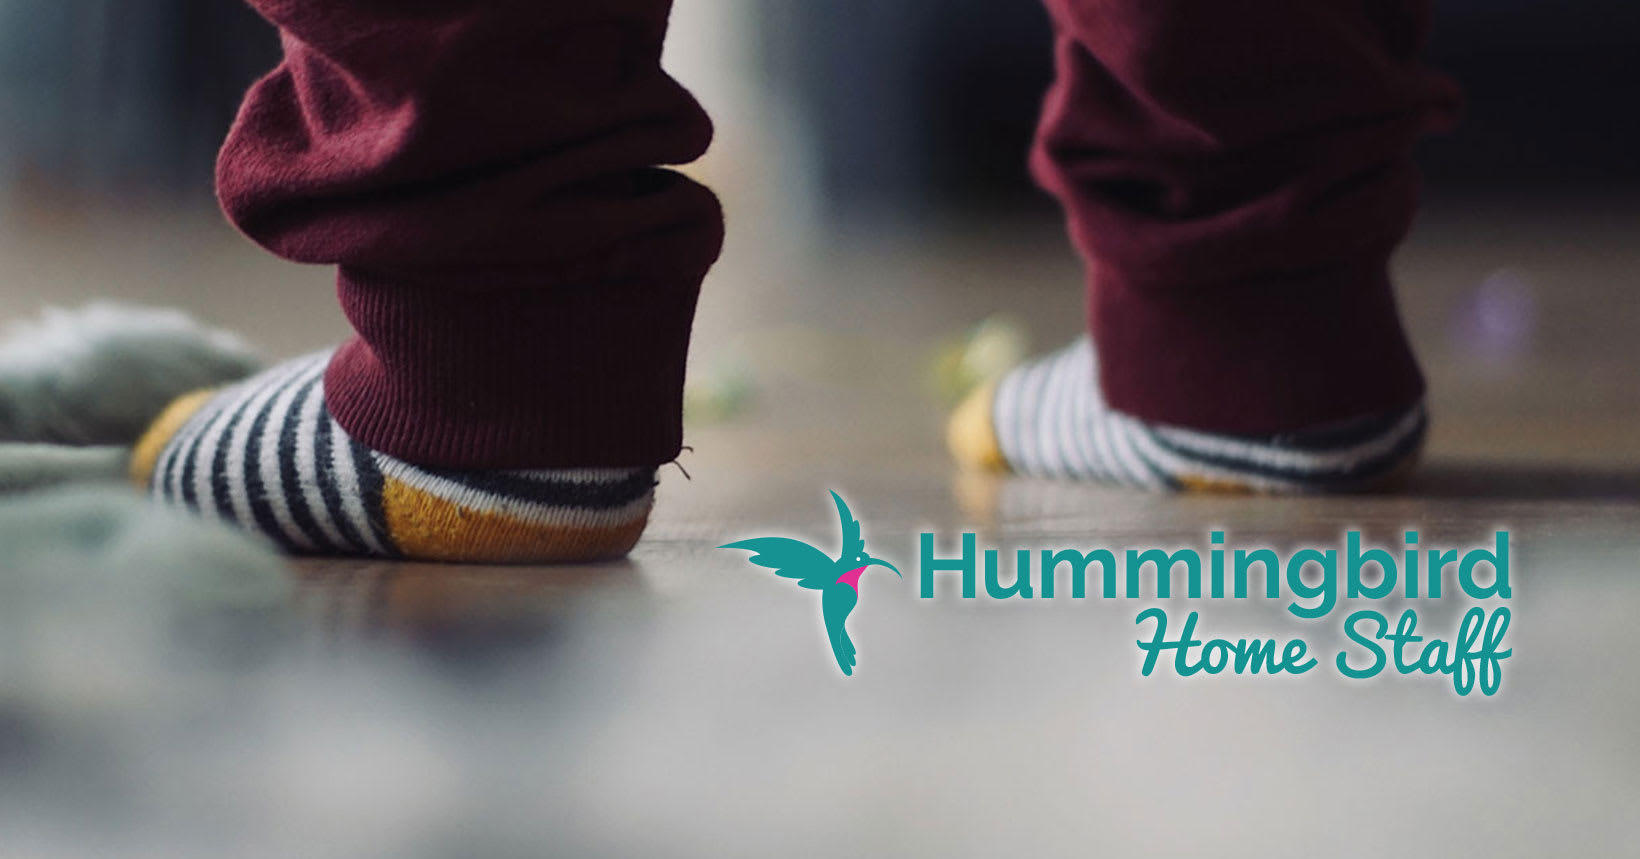 Images Hummingbird Homestaff Ltd